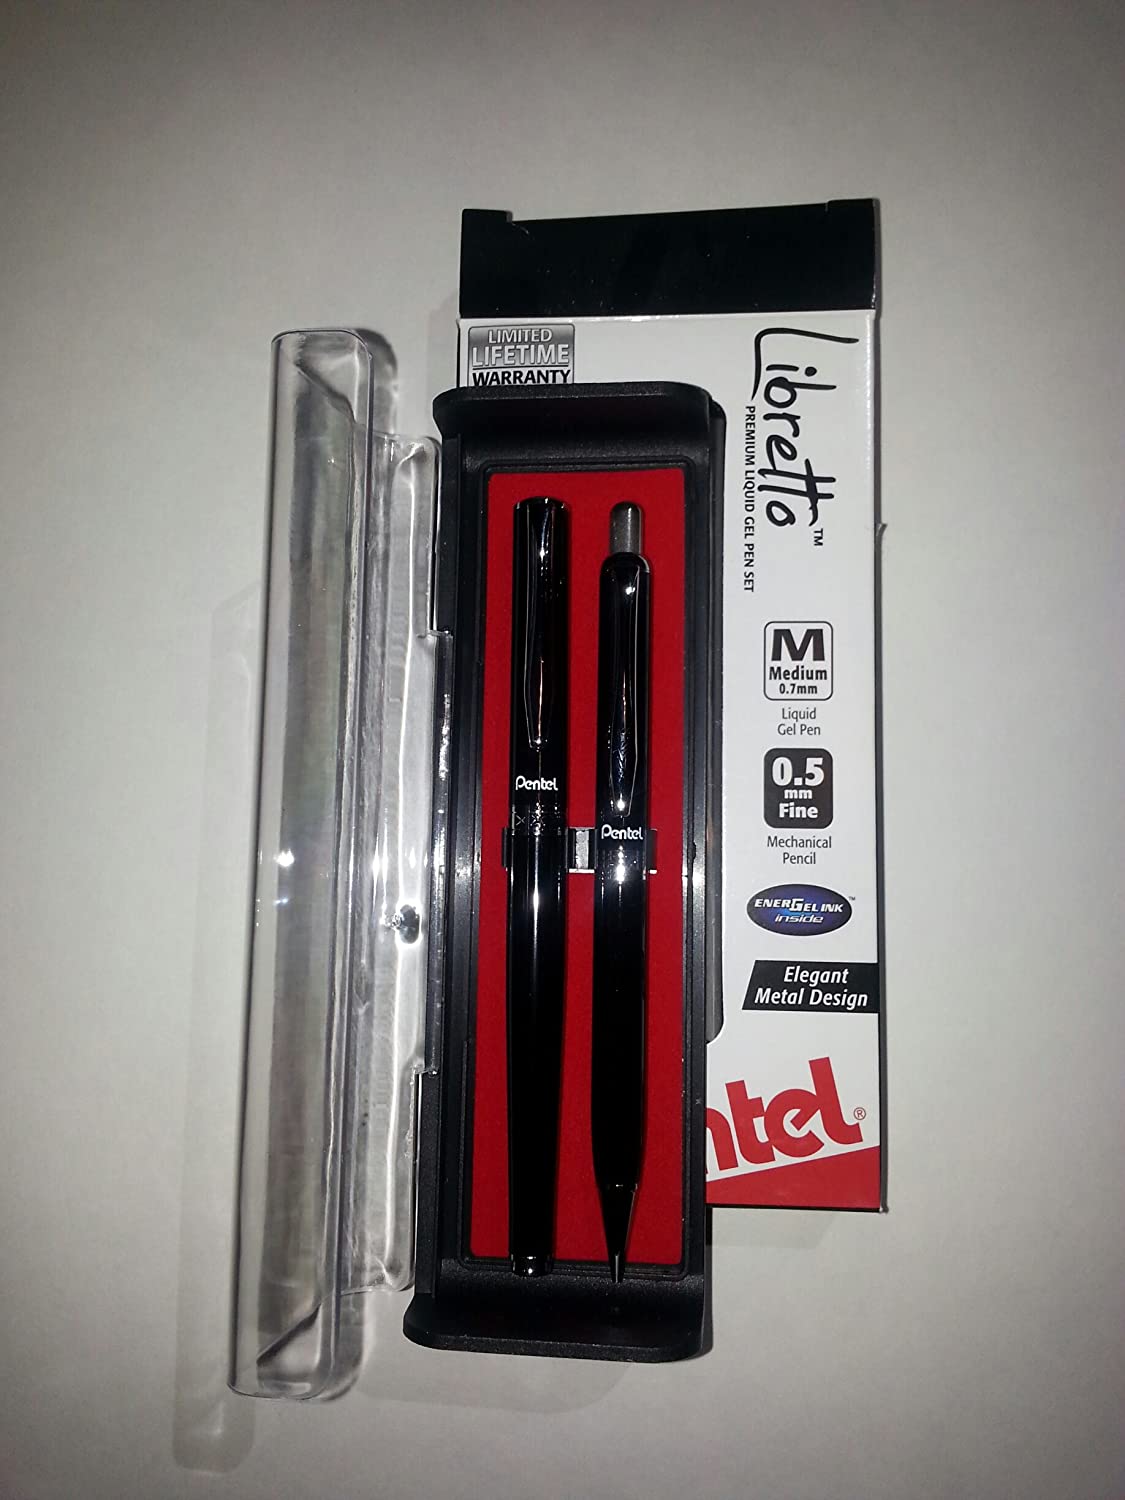 Libretto Premium Liquid Gel Pen Set (Liquid Gel Pen and Mechanical Pencil) With Gift Box - Black